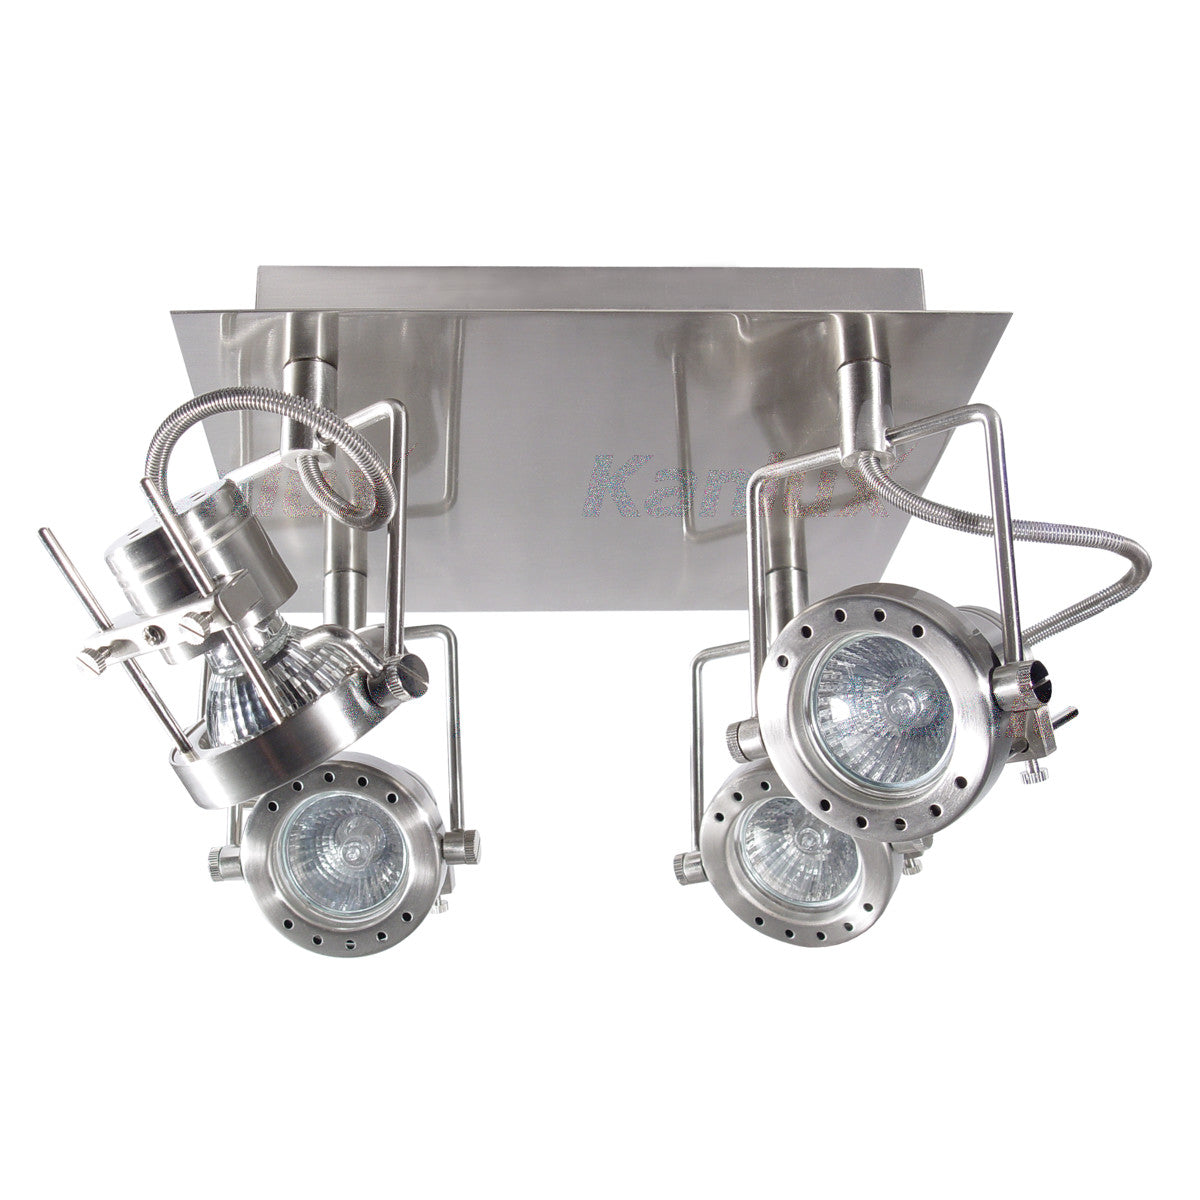 Kanlux SONDA LED Bar Spot Light Adjustable GU10 Lamp 240V Mounted Ceiling Fixture